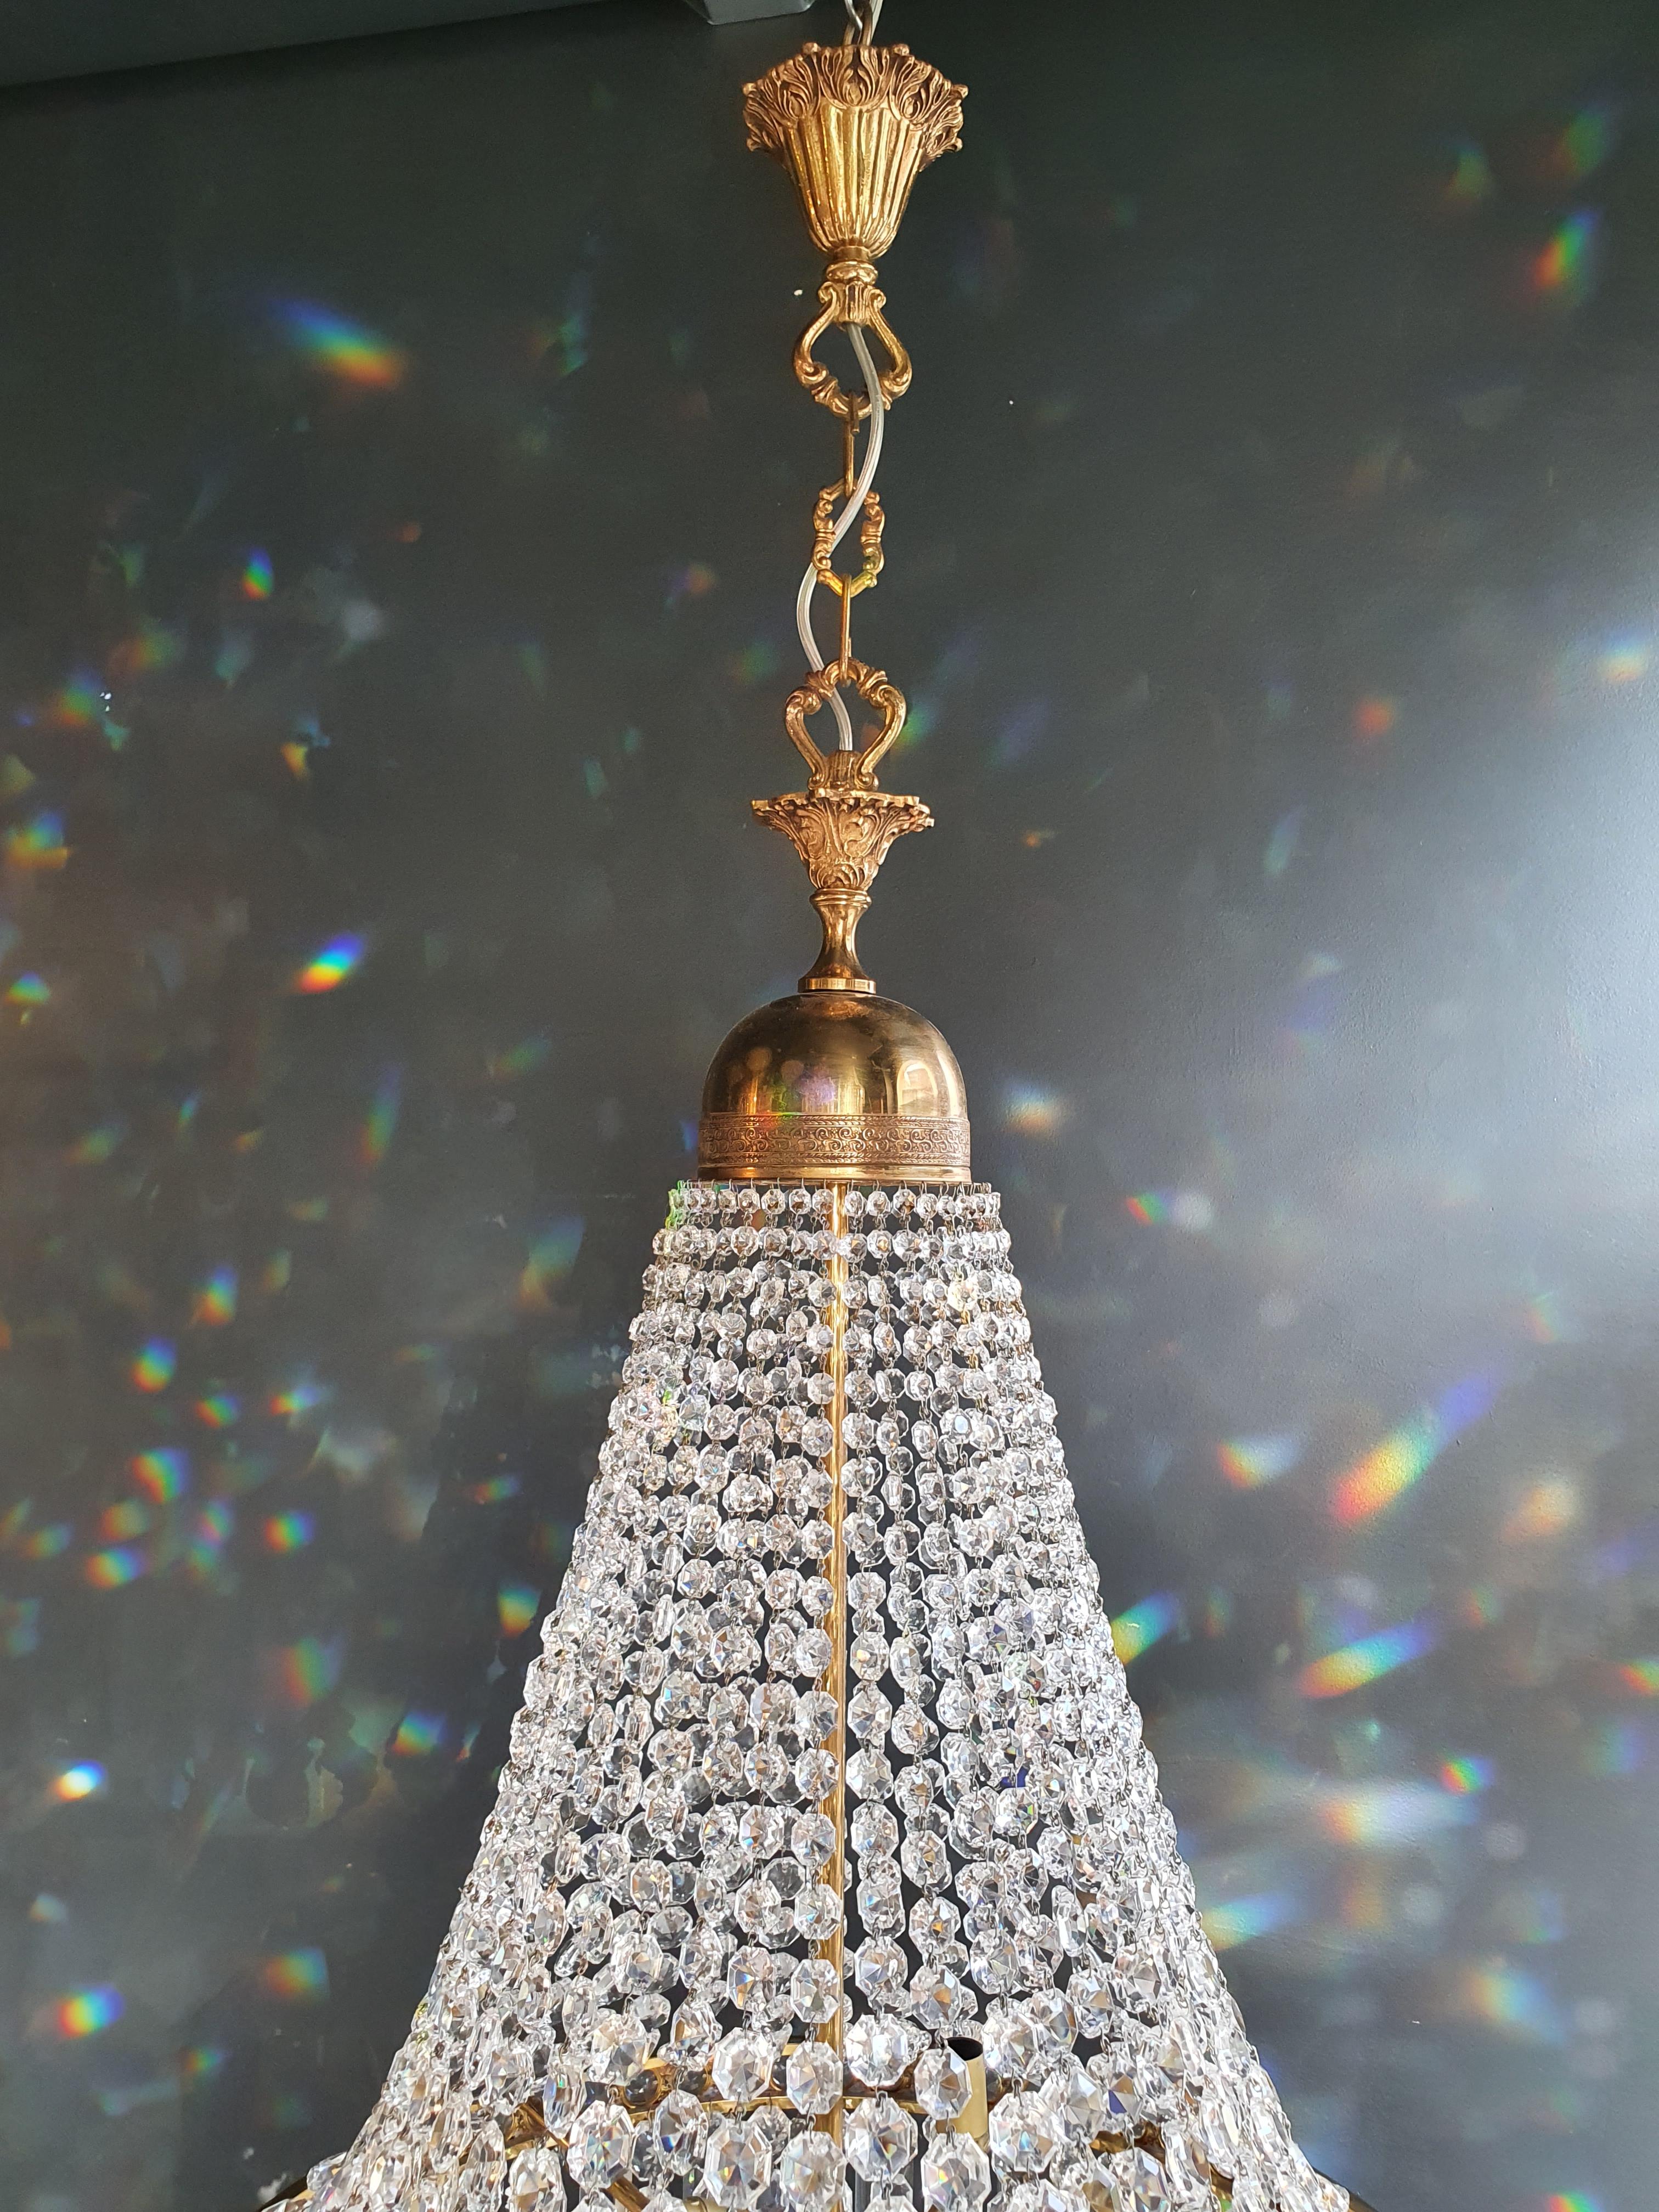 Montgolfiè Empire Brass Sac a Pearl Chandelier Crystal Lustre Ceiling Antique 2